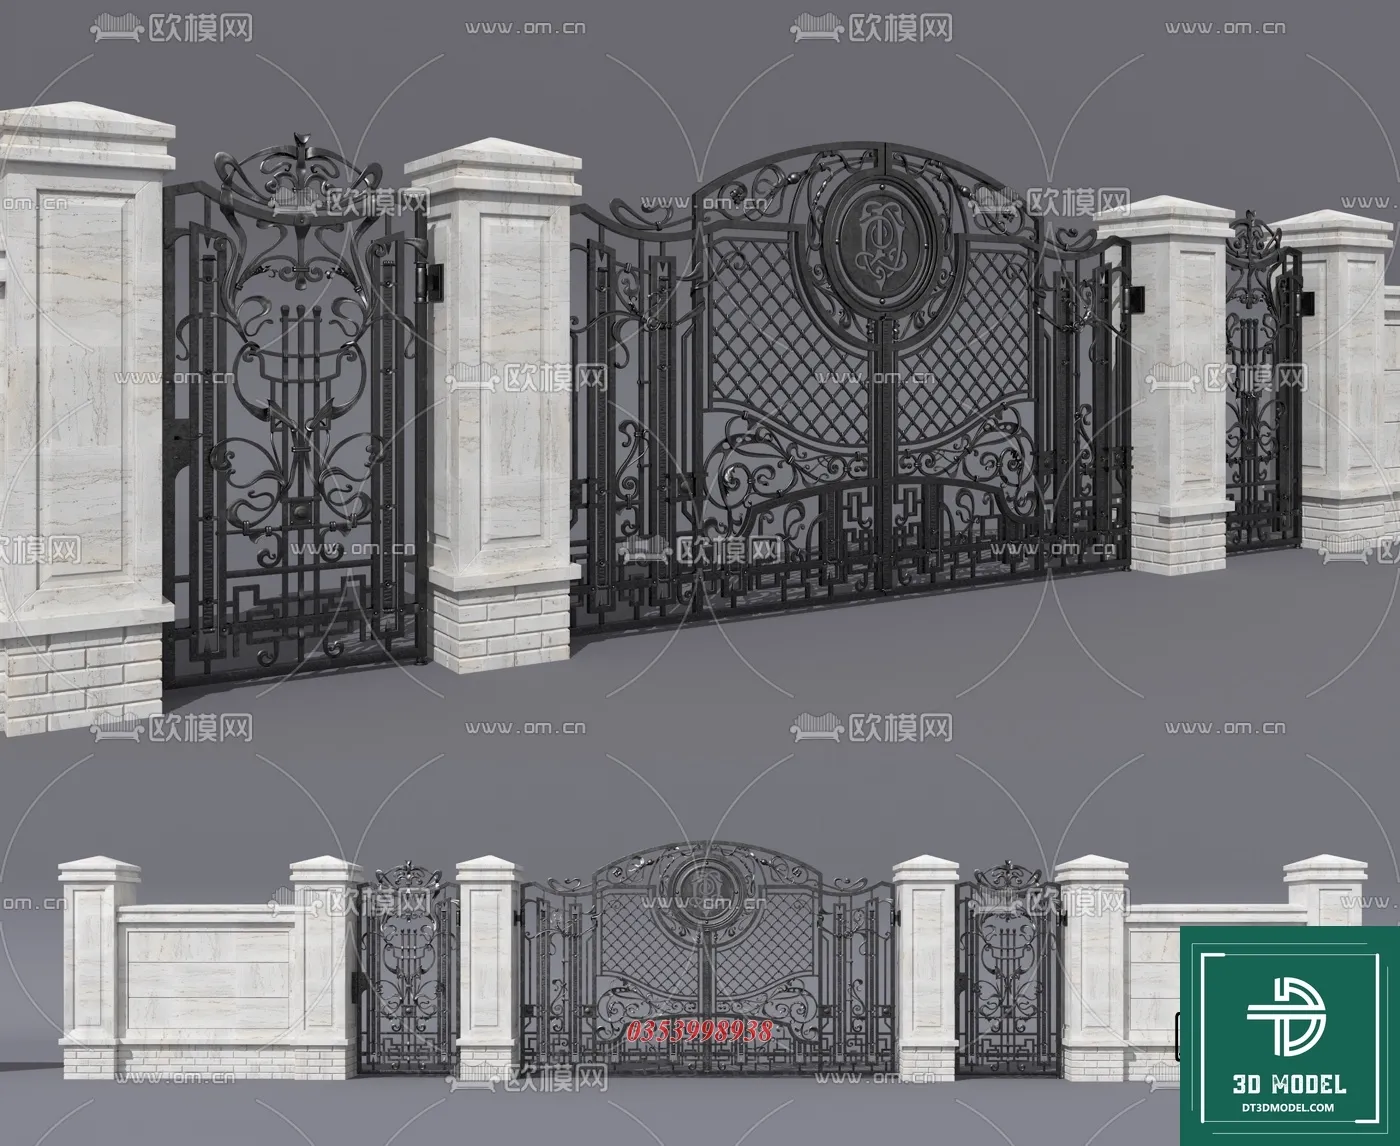 CLASSIC GATE – 3D MODELS – 039